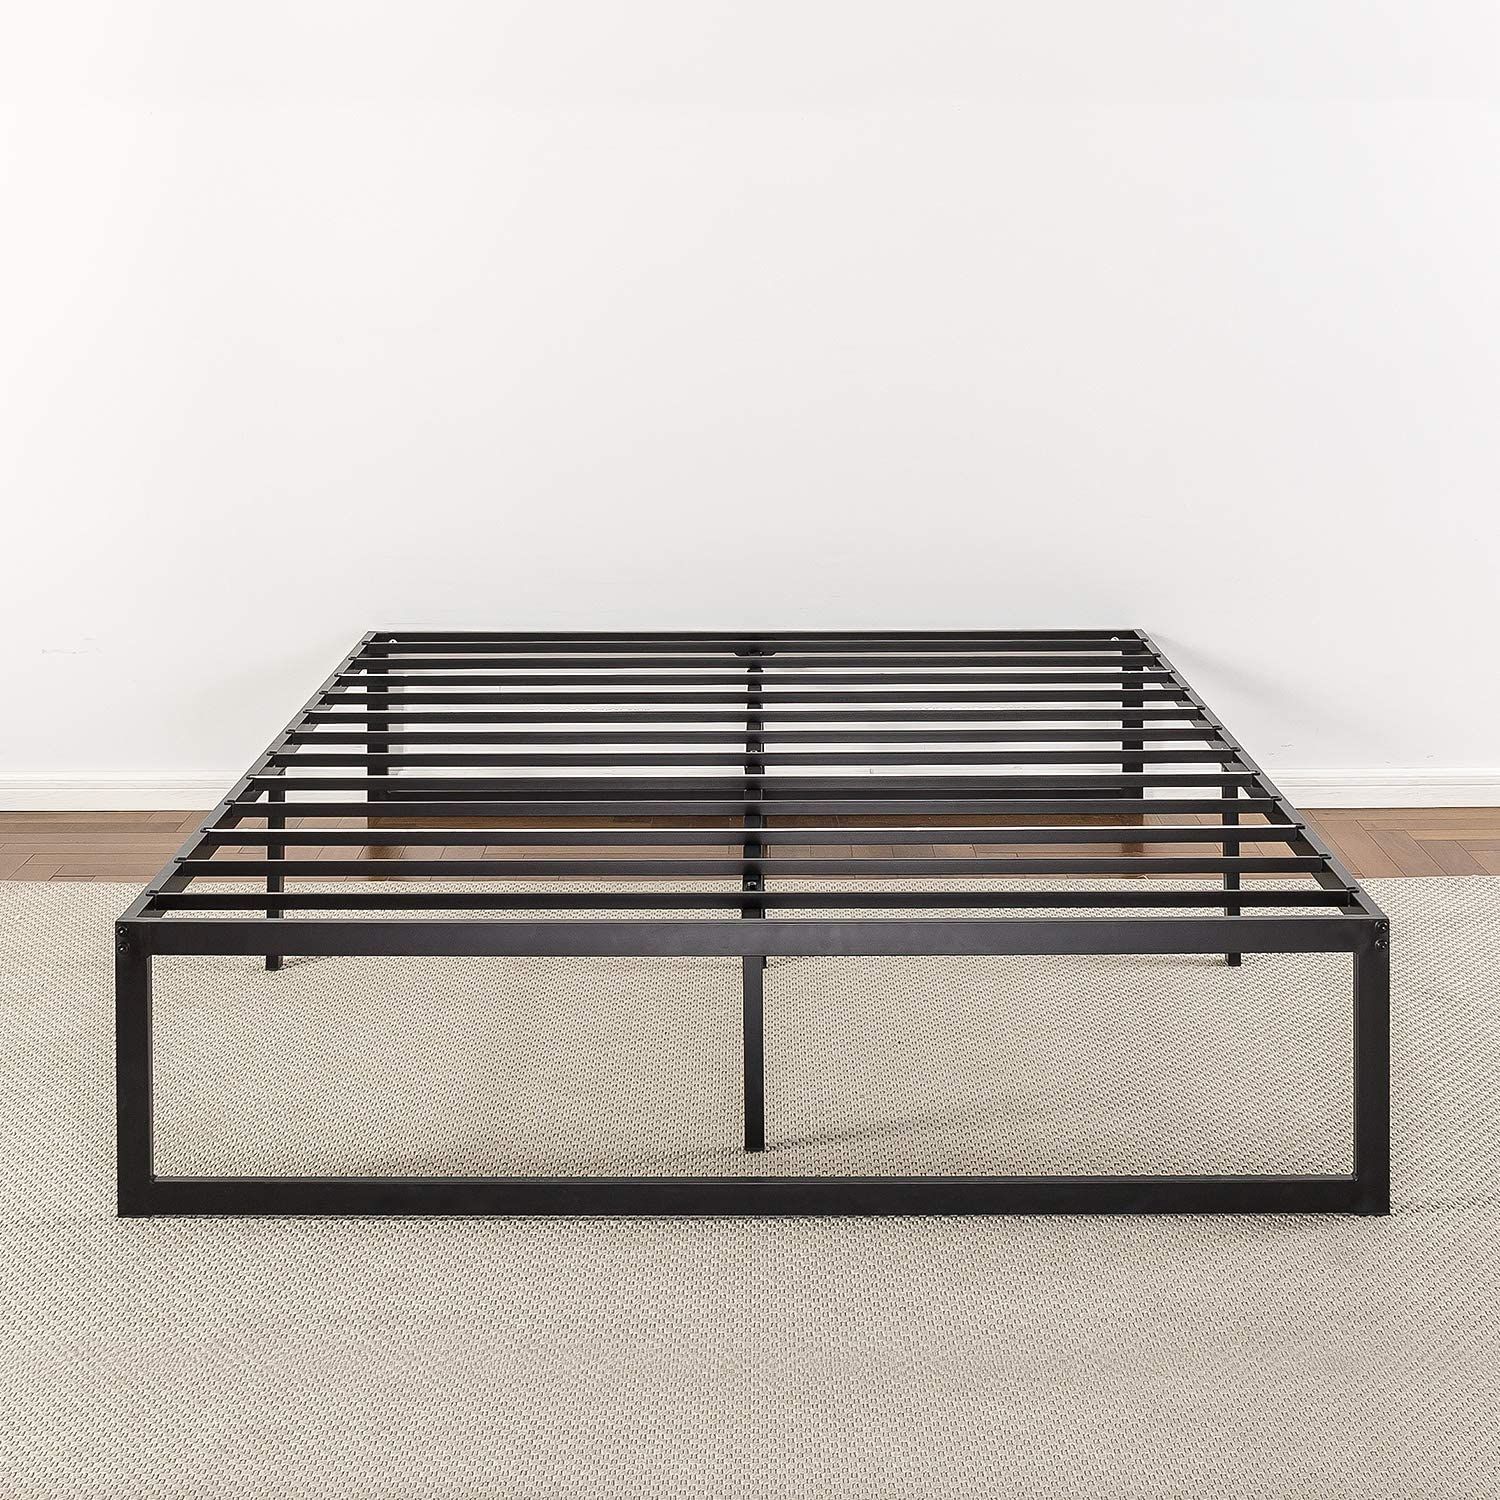 19 Best Metal Bed Frames 2020 The, Heavy Duty Steel Bed Frame